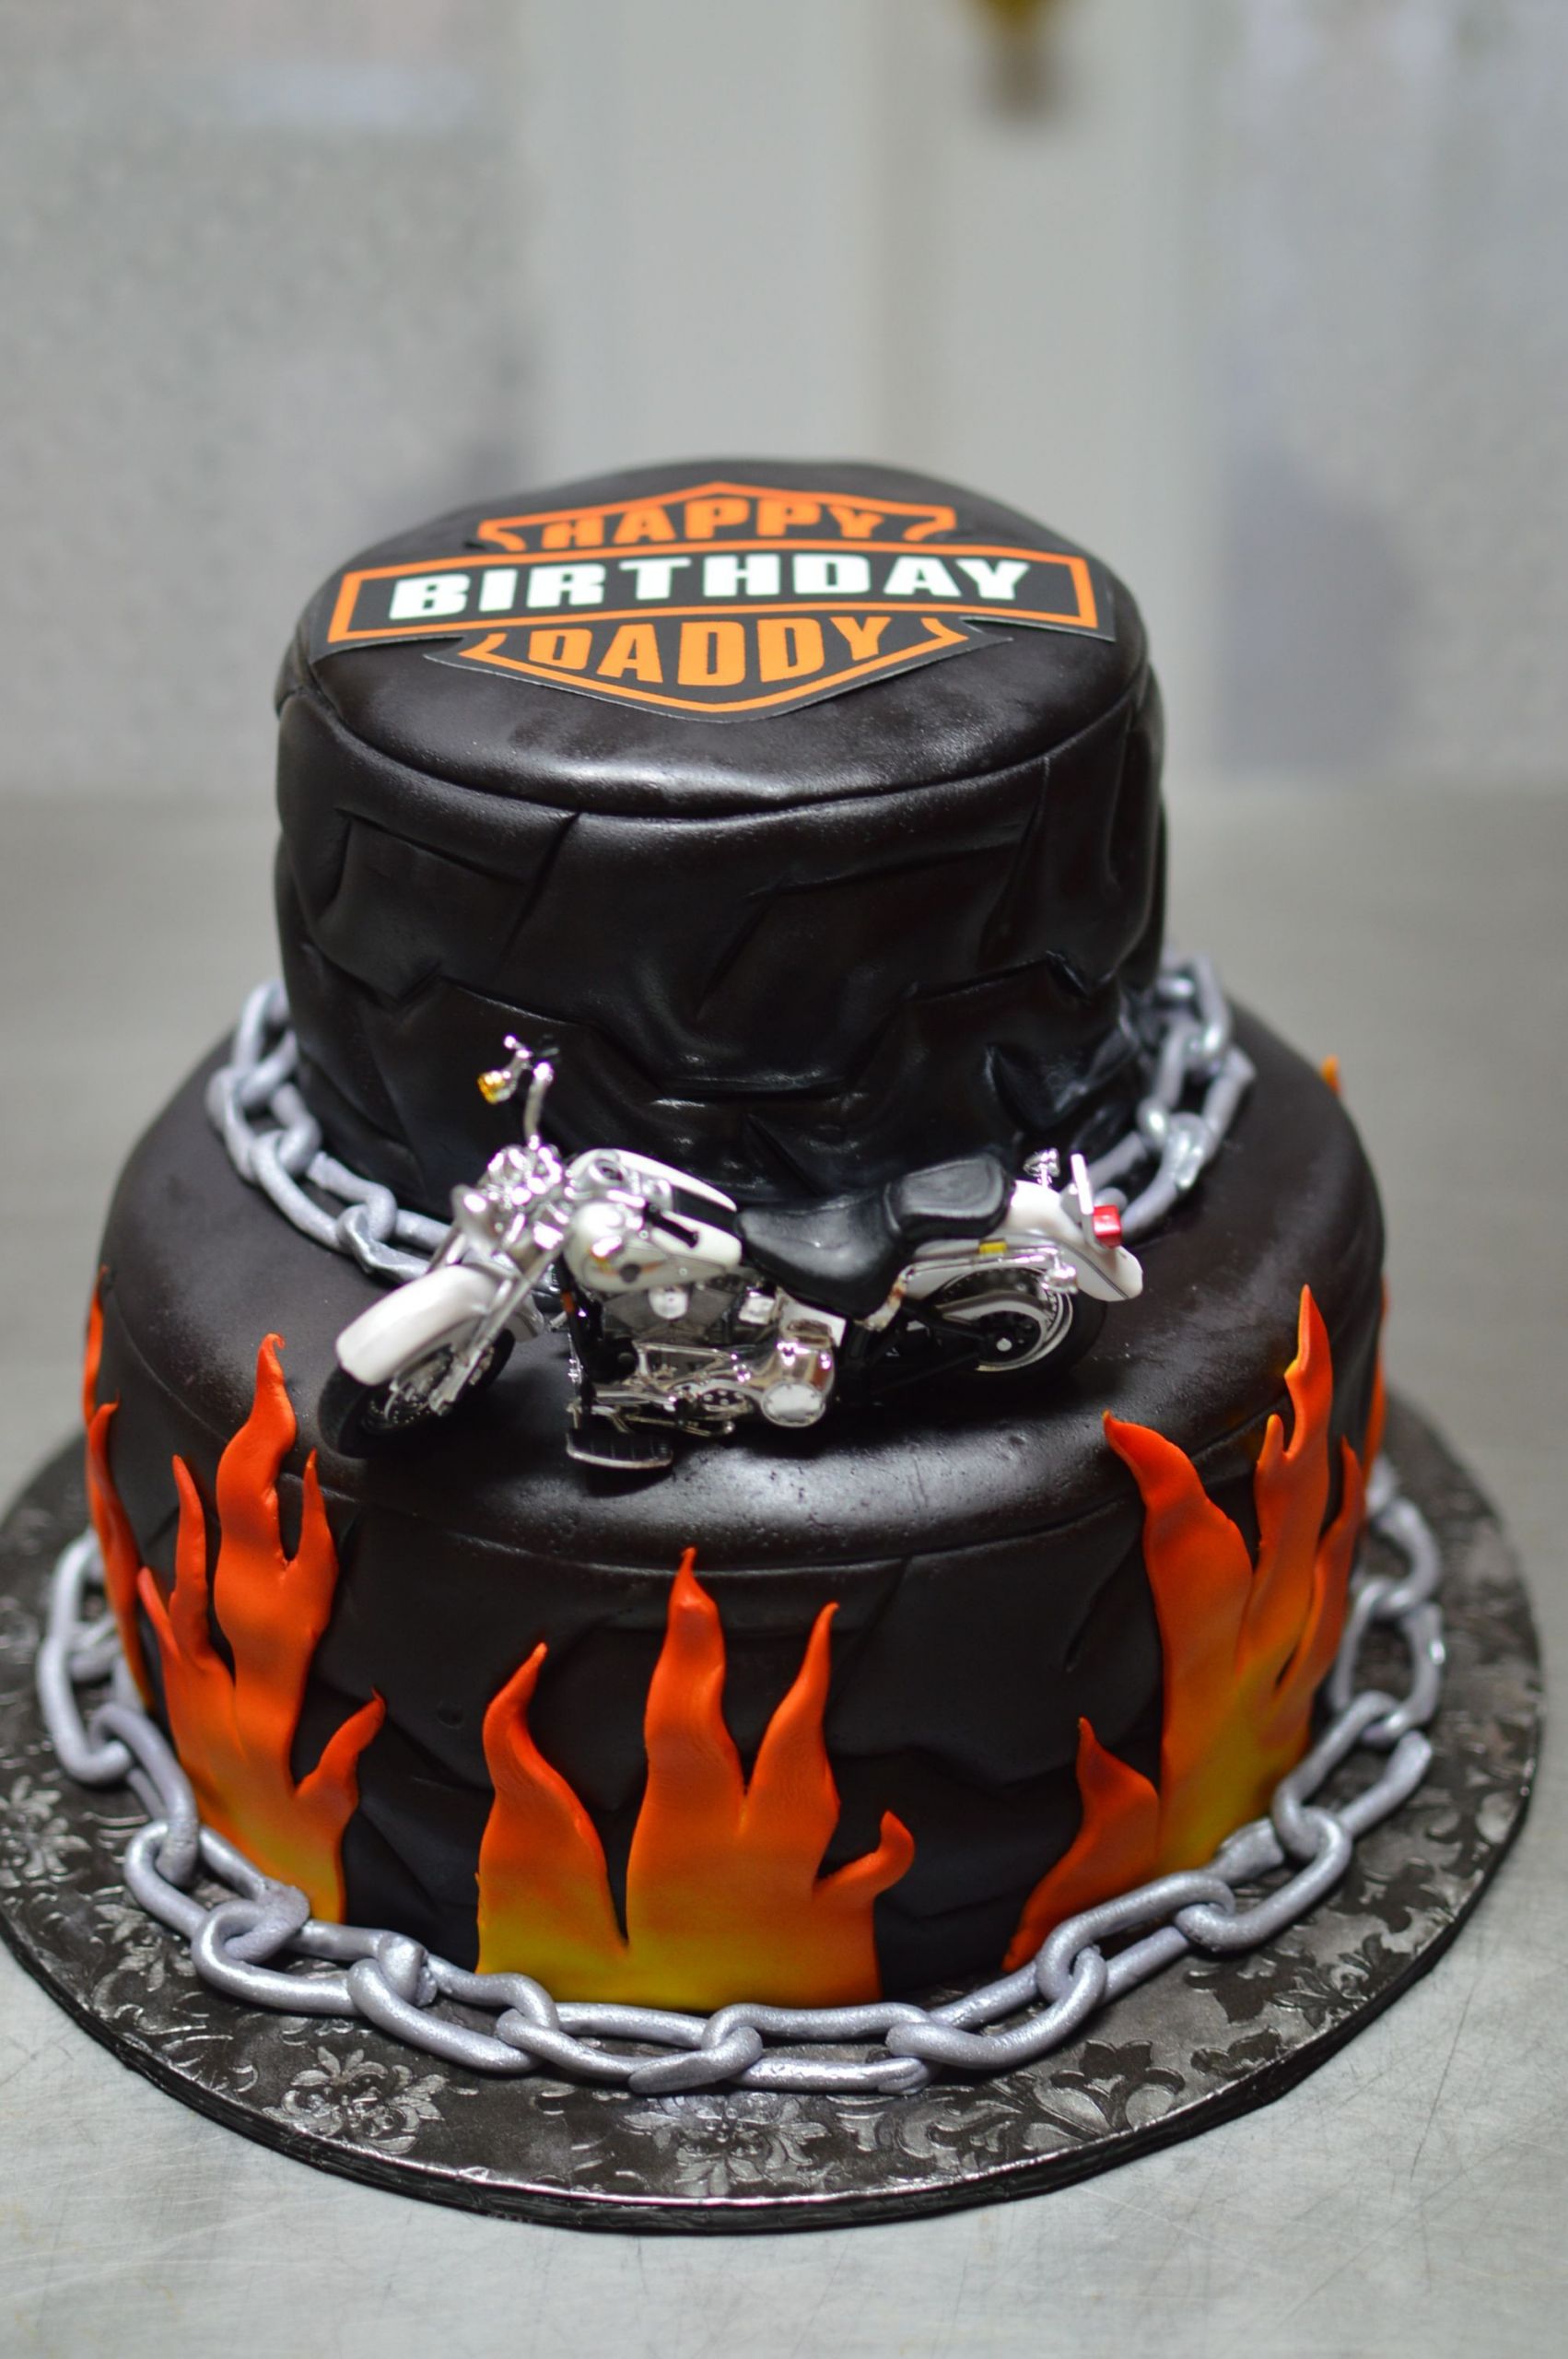 Harley Davidson Birthday Cakes
 Harley Davidson Cake cakes